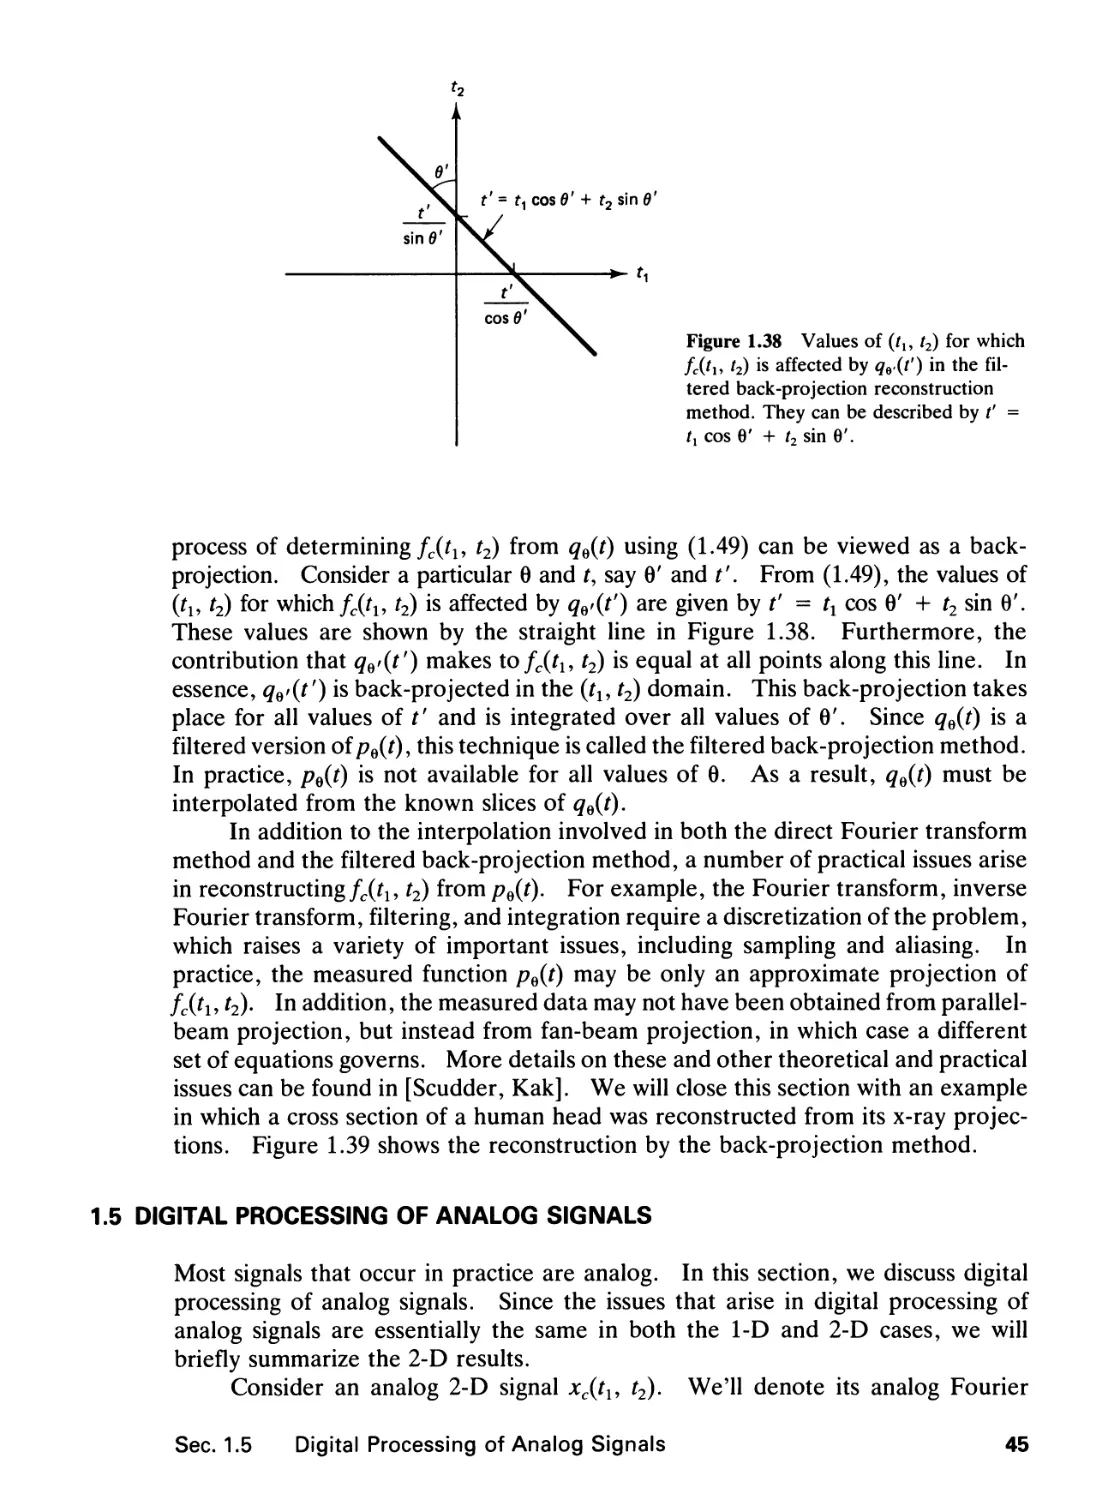 1.5 Digital Processing of Analog Signals